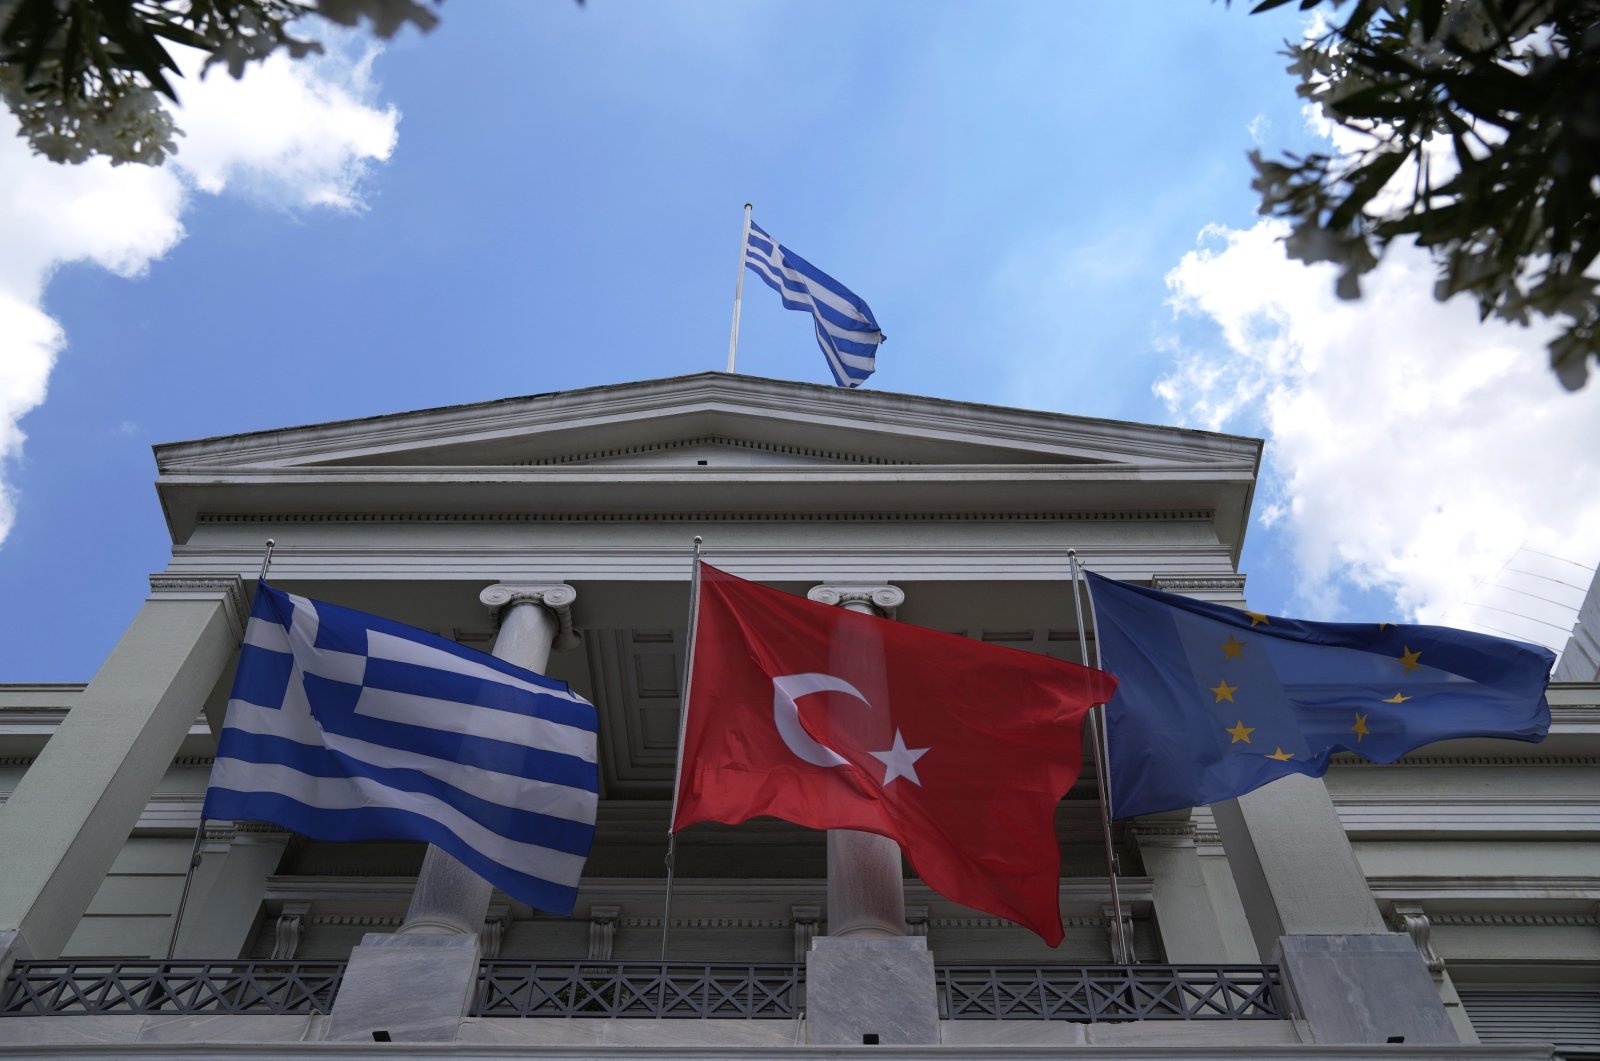 Turki mengecam keputusan pengadilan Rhodes untuk memenjarakan staf konsulat